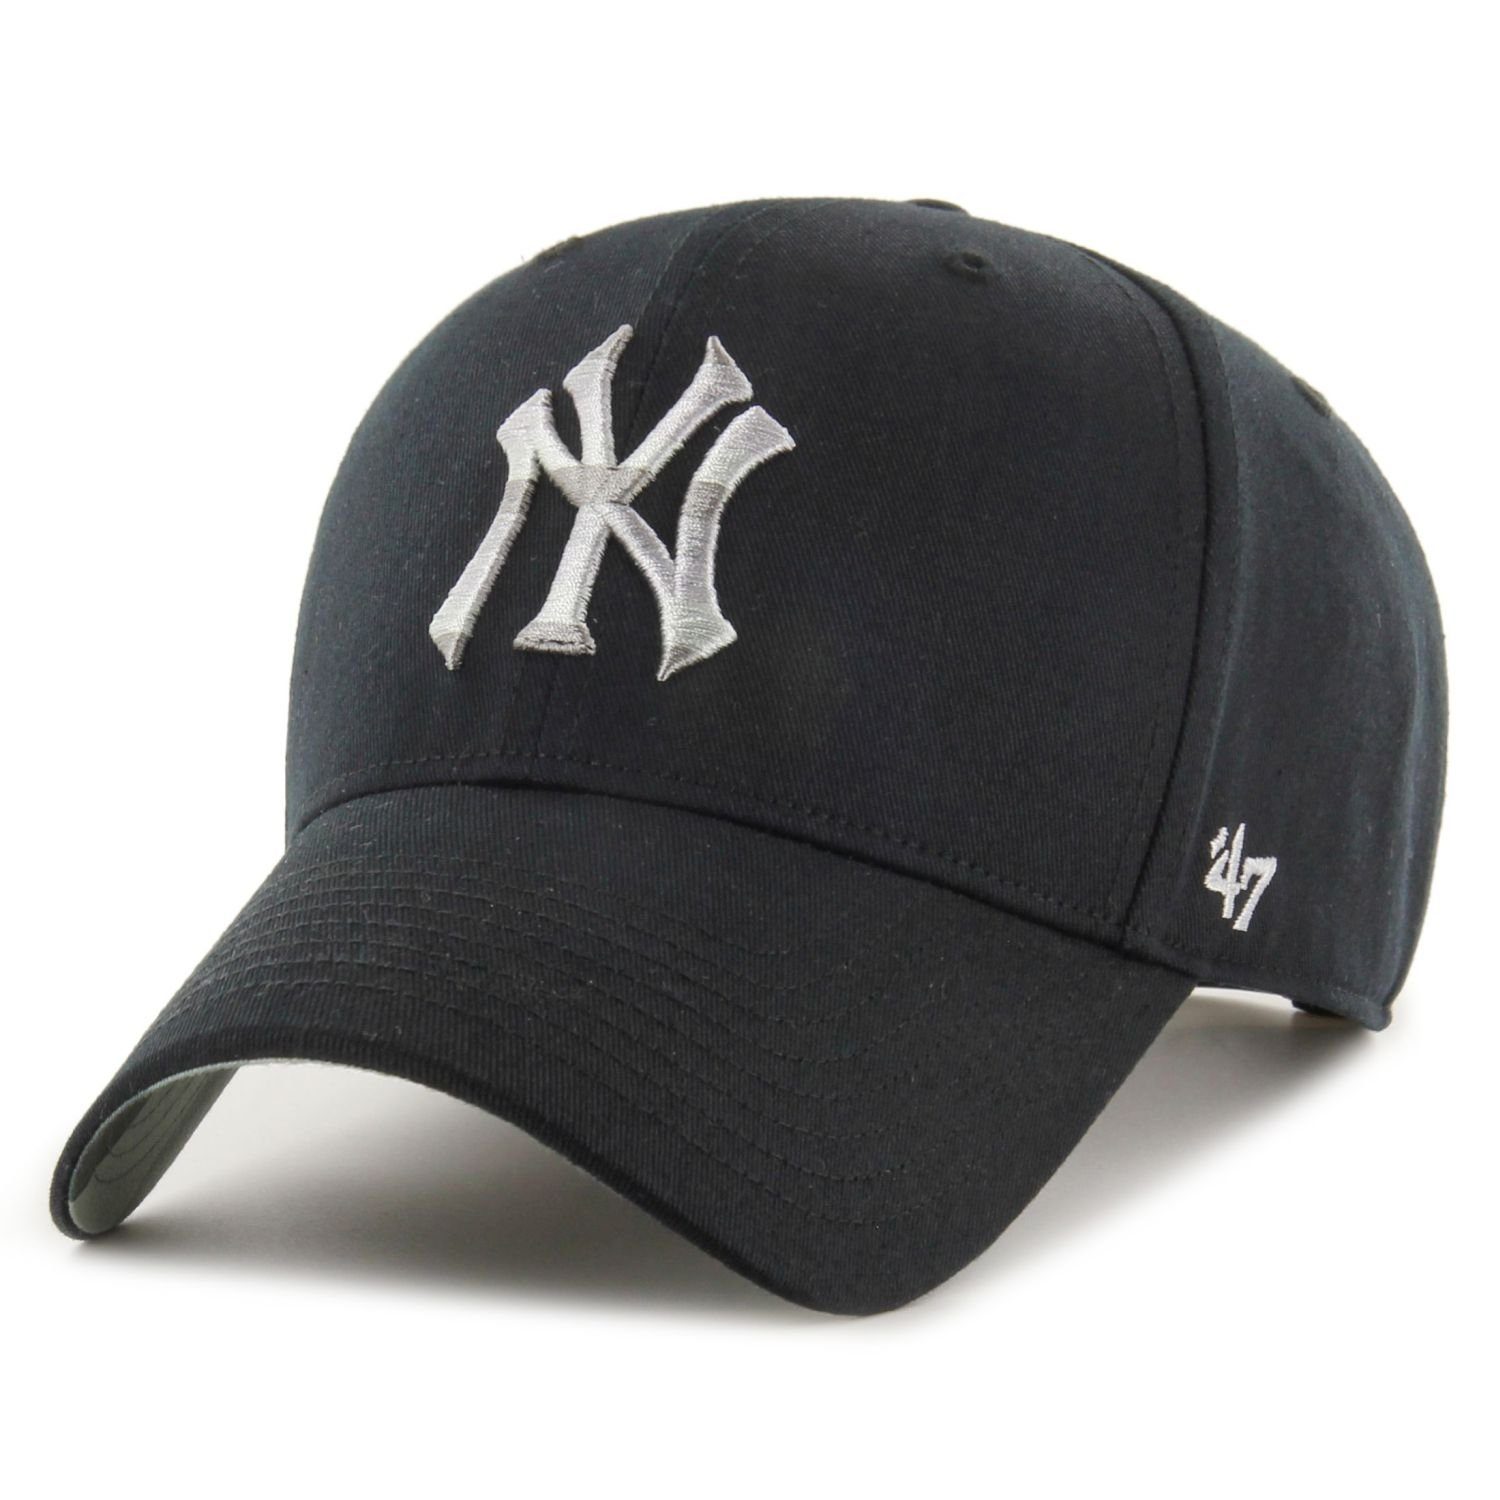 York Fit Cap New Brand '47 RETRO Relaxed Yankees Baseball